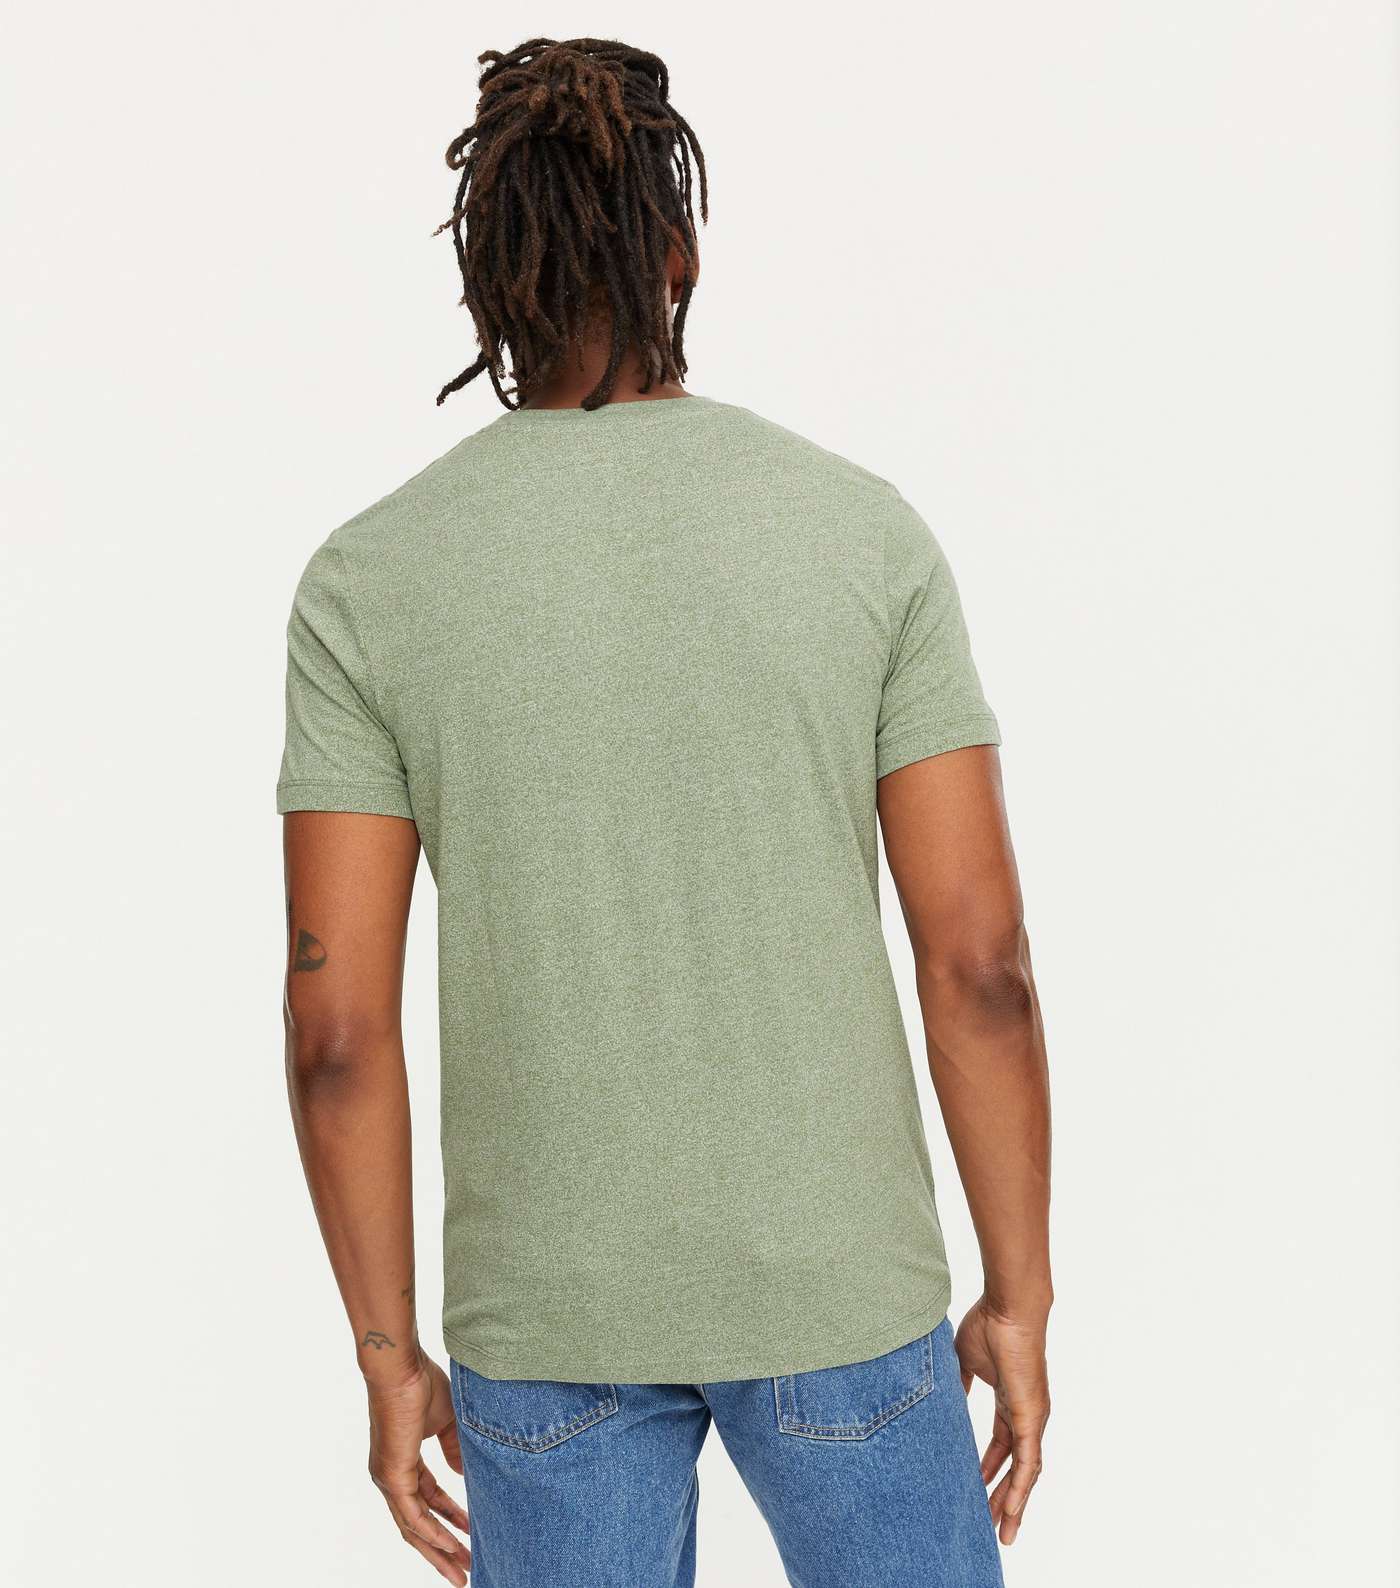 Jack & Jones Green Embroidered T-Shirt Image 4